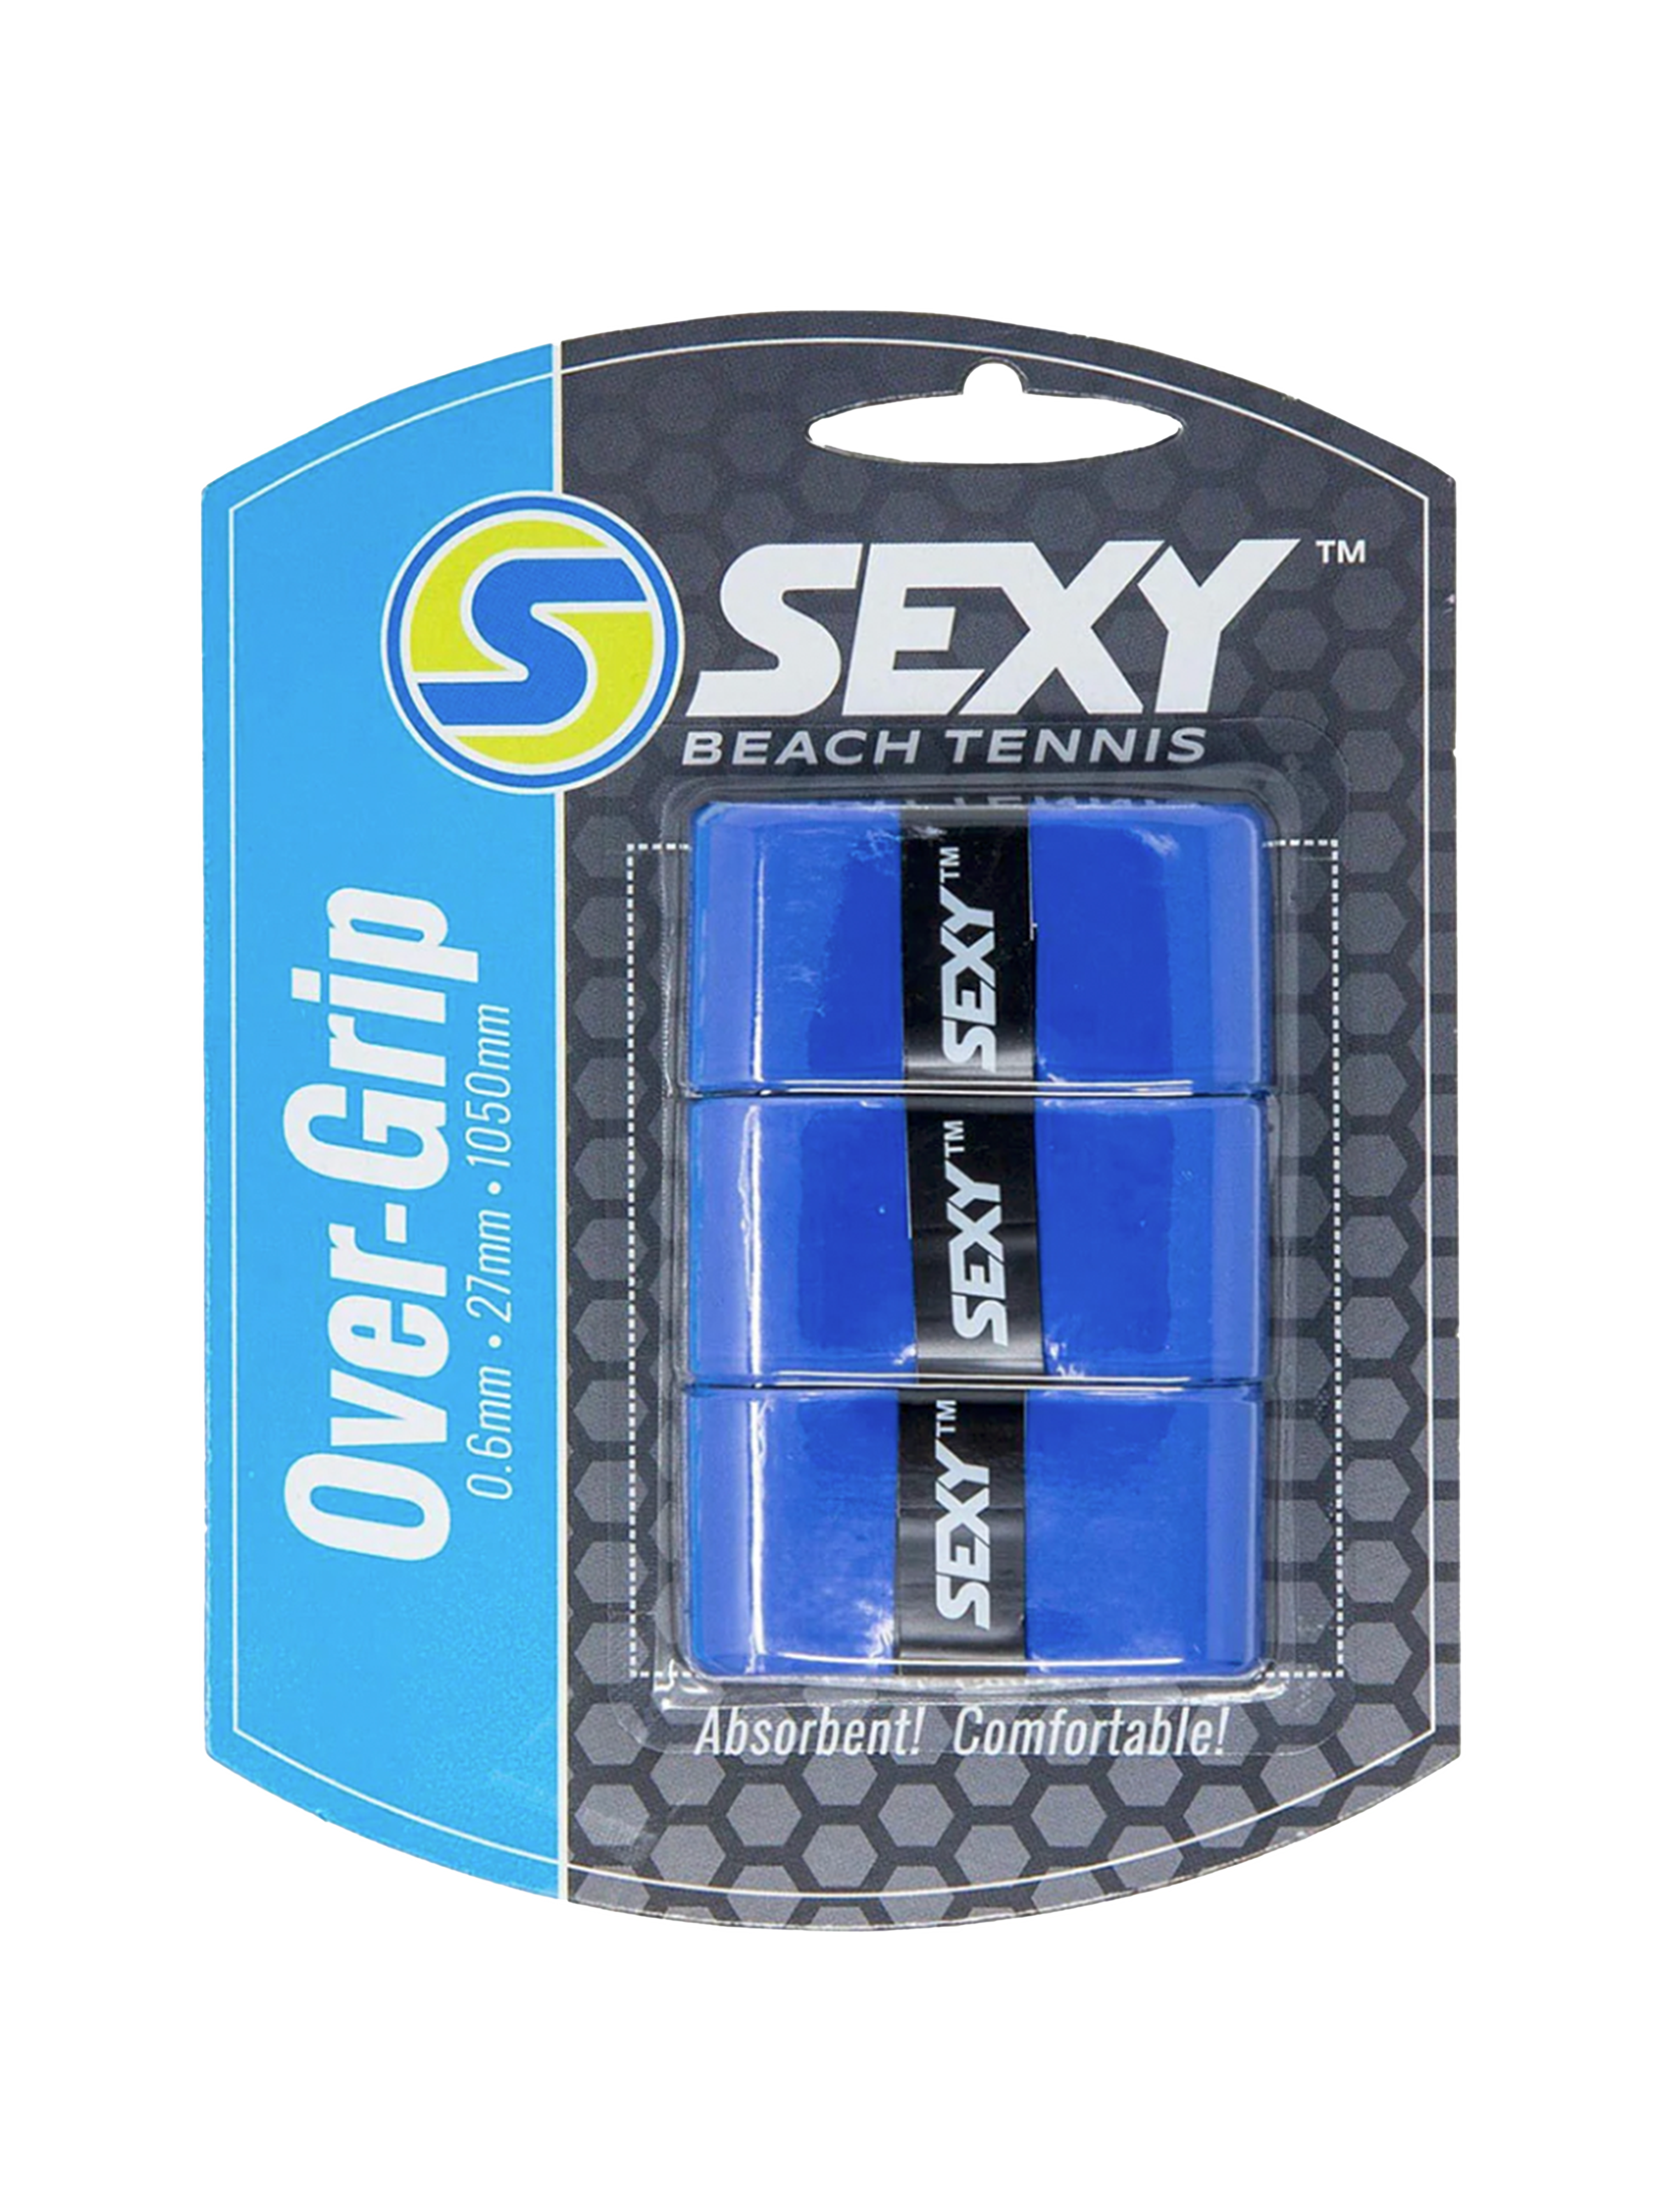 SEXY Beach Tennis Grips - 3 Pack